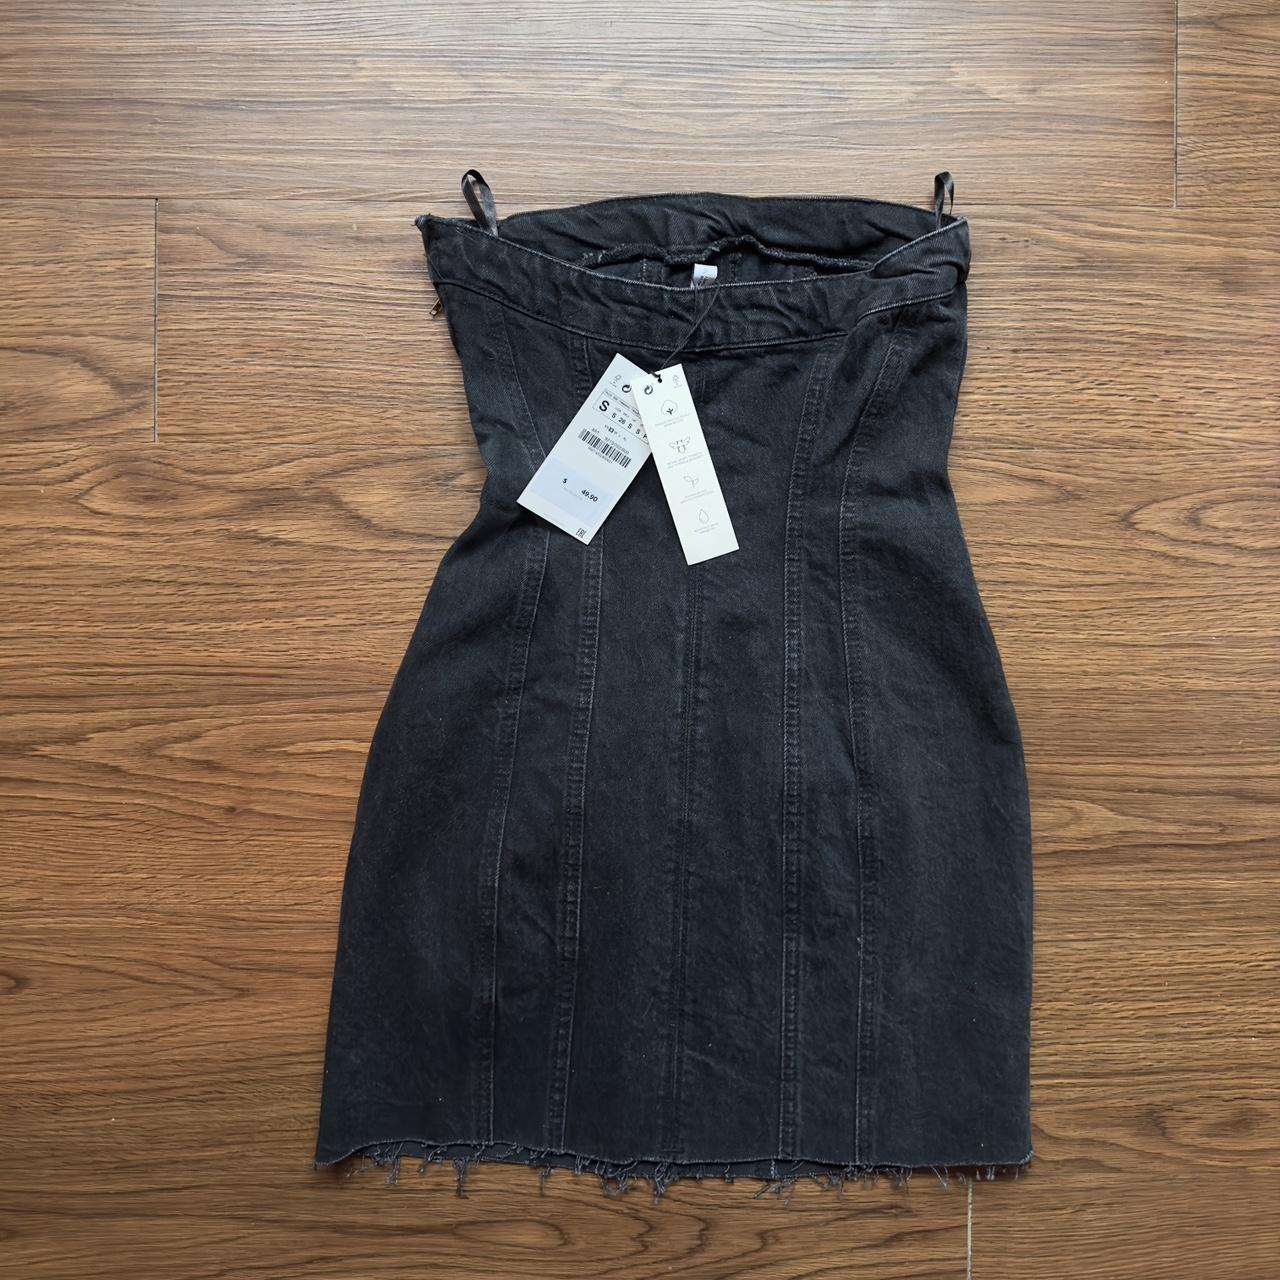 Zara Women's Black and Grey Dress (2)